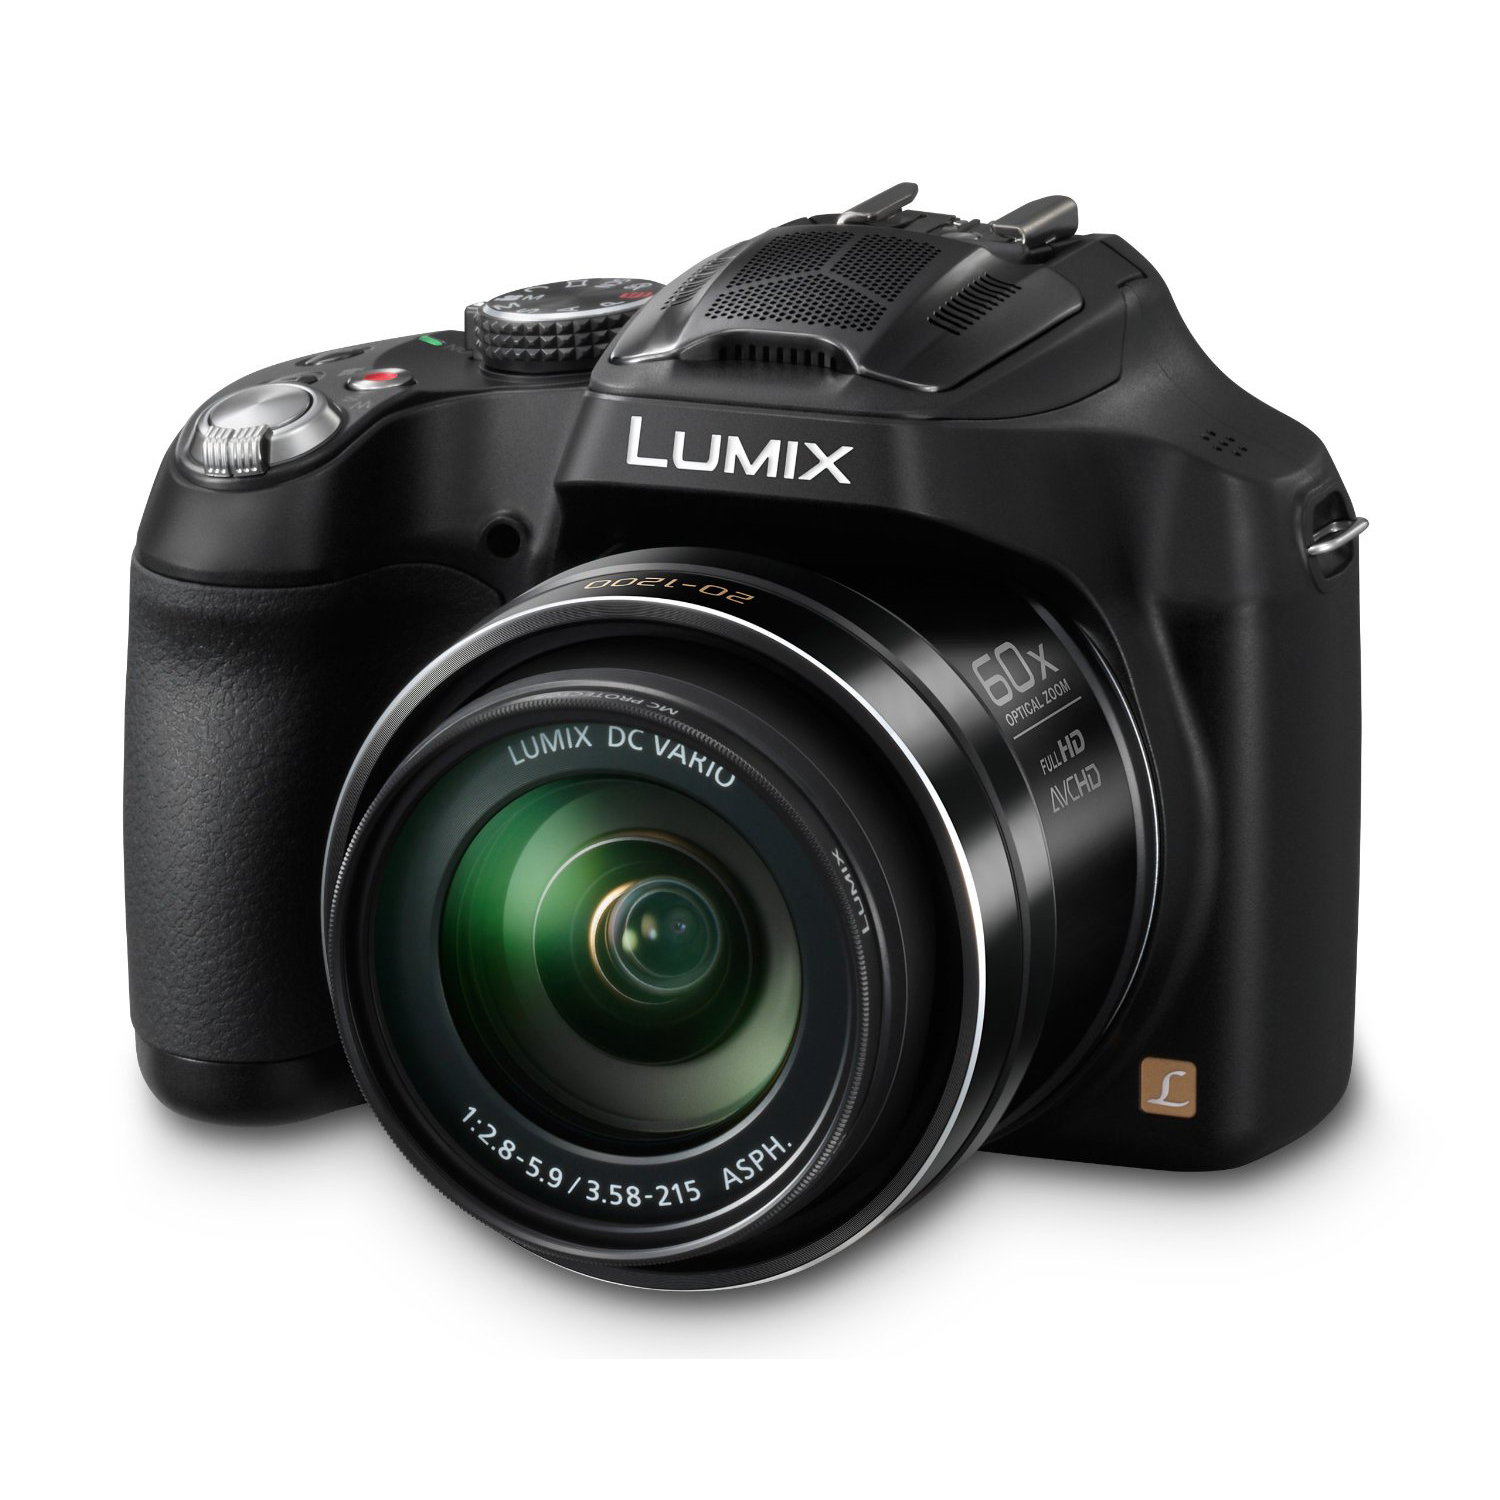 Canon PowerShot SX70 HS vs Panasonic Lumix DMC FZ80